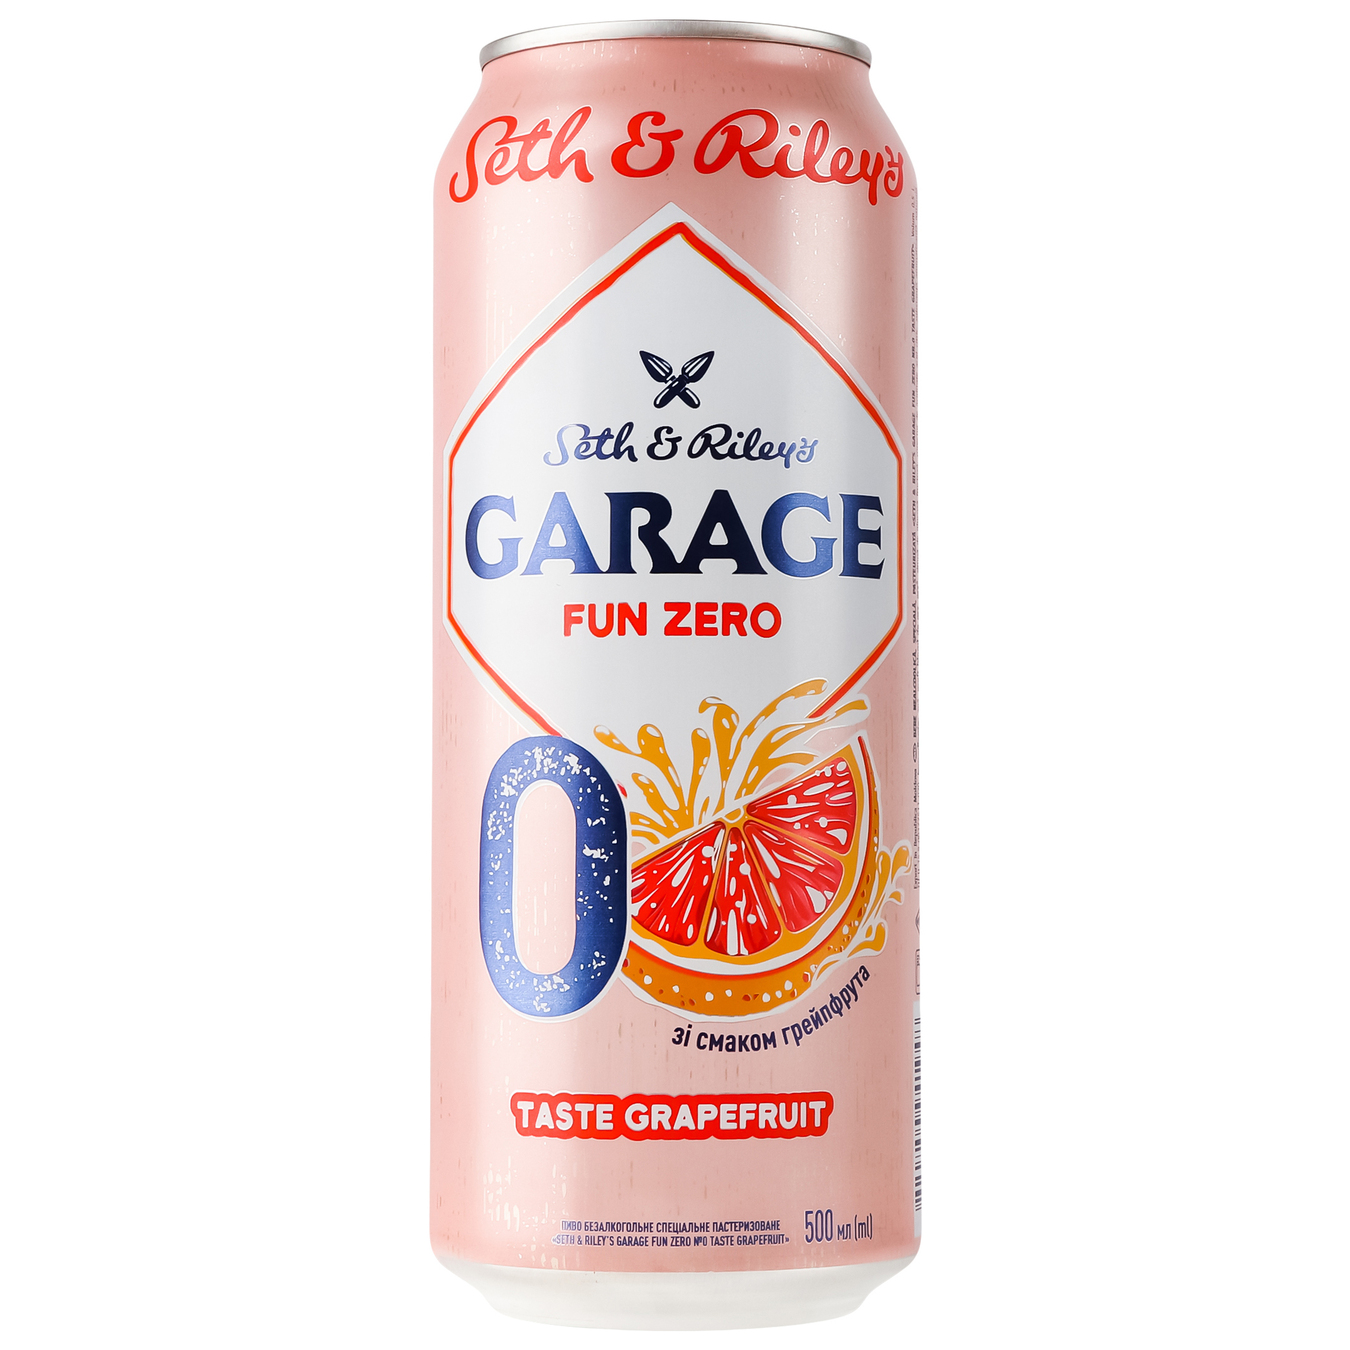 Non-alcoholic beer Seth&Riley's Garage fun zero No. 0 taste Grapefruit 0.5 l